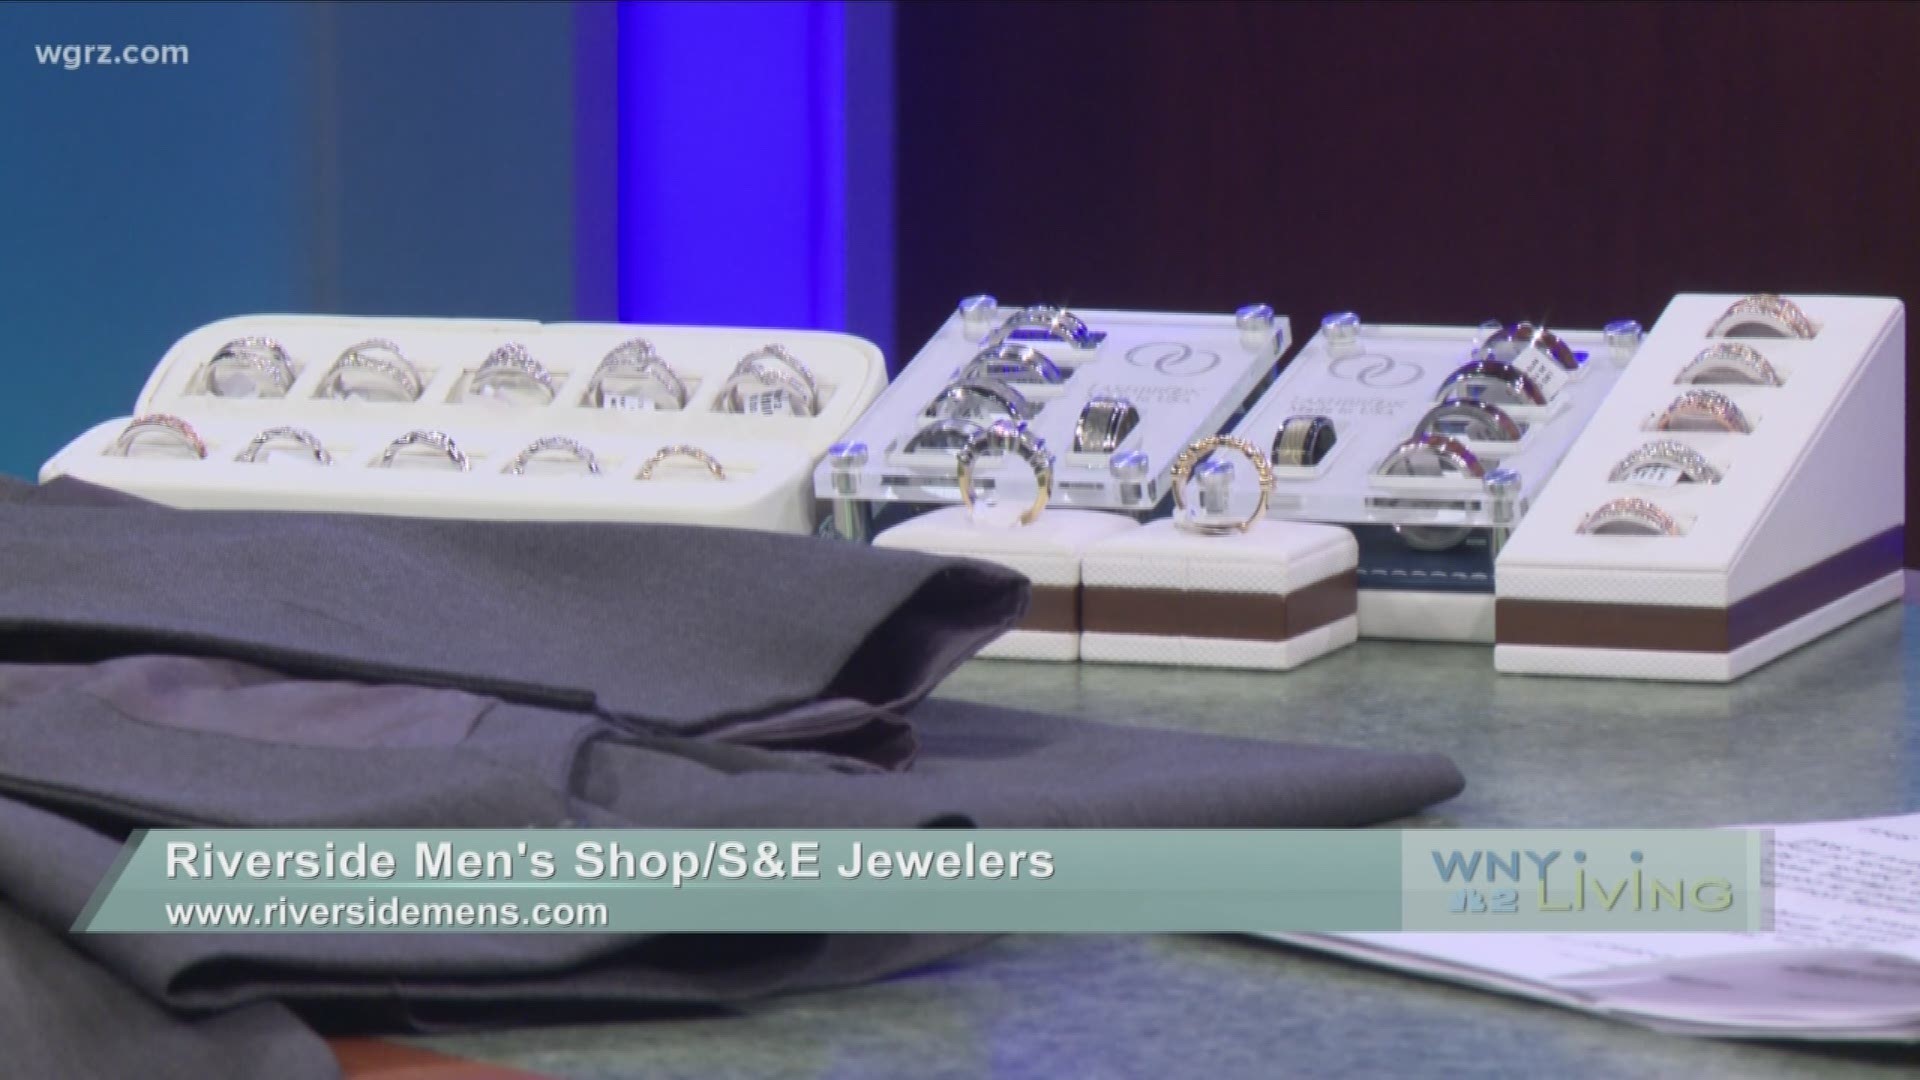 WNY Living - February 11 - Riverside Men's Shop/S&E Jewelers